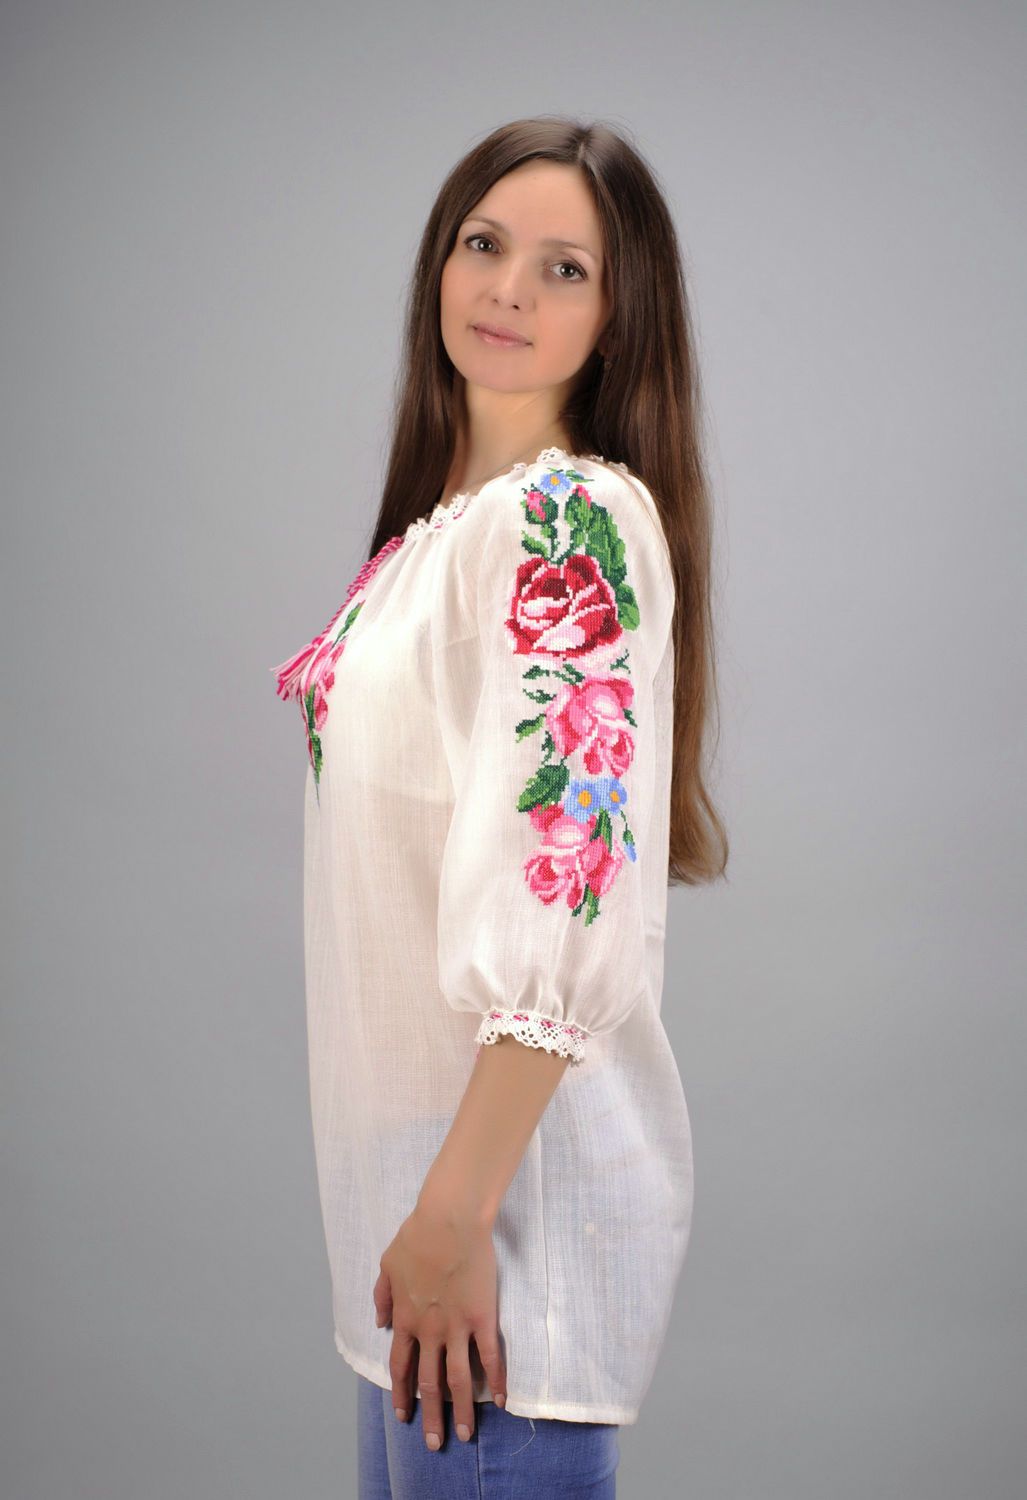 Chemise femme brodée ethnique ukrainienne Vychyvanka avec roses photo 5